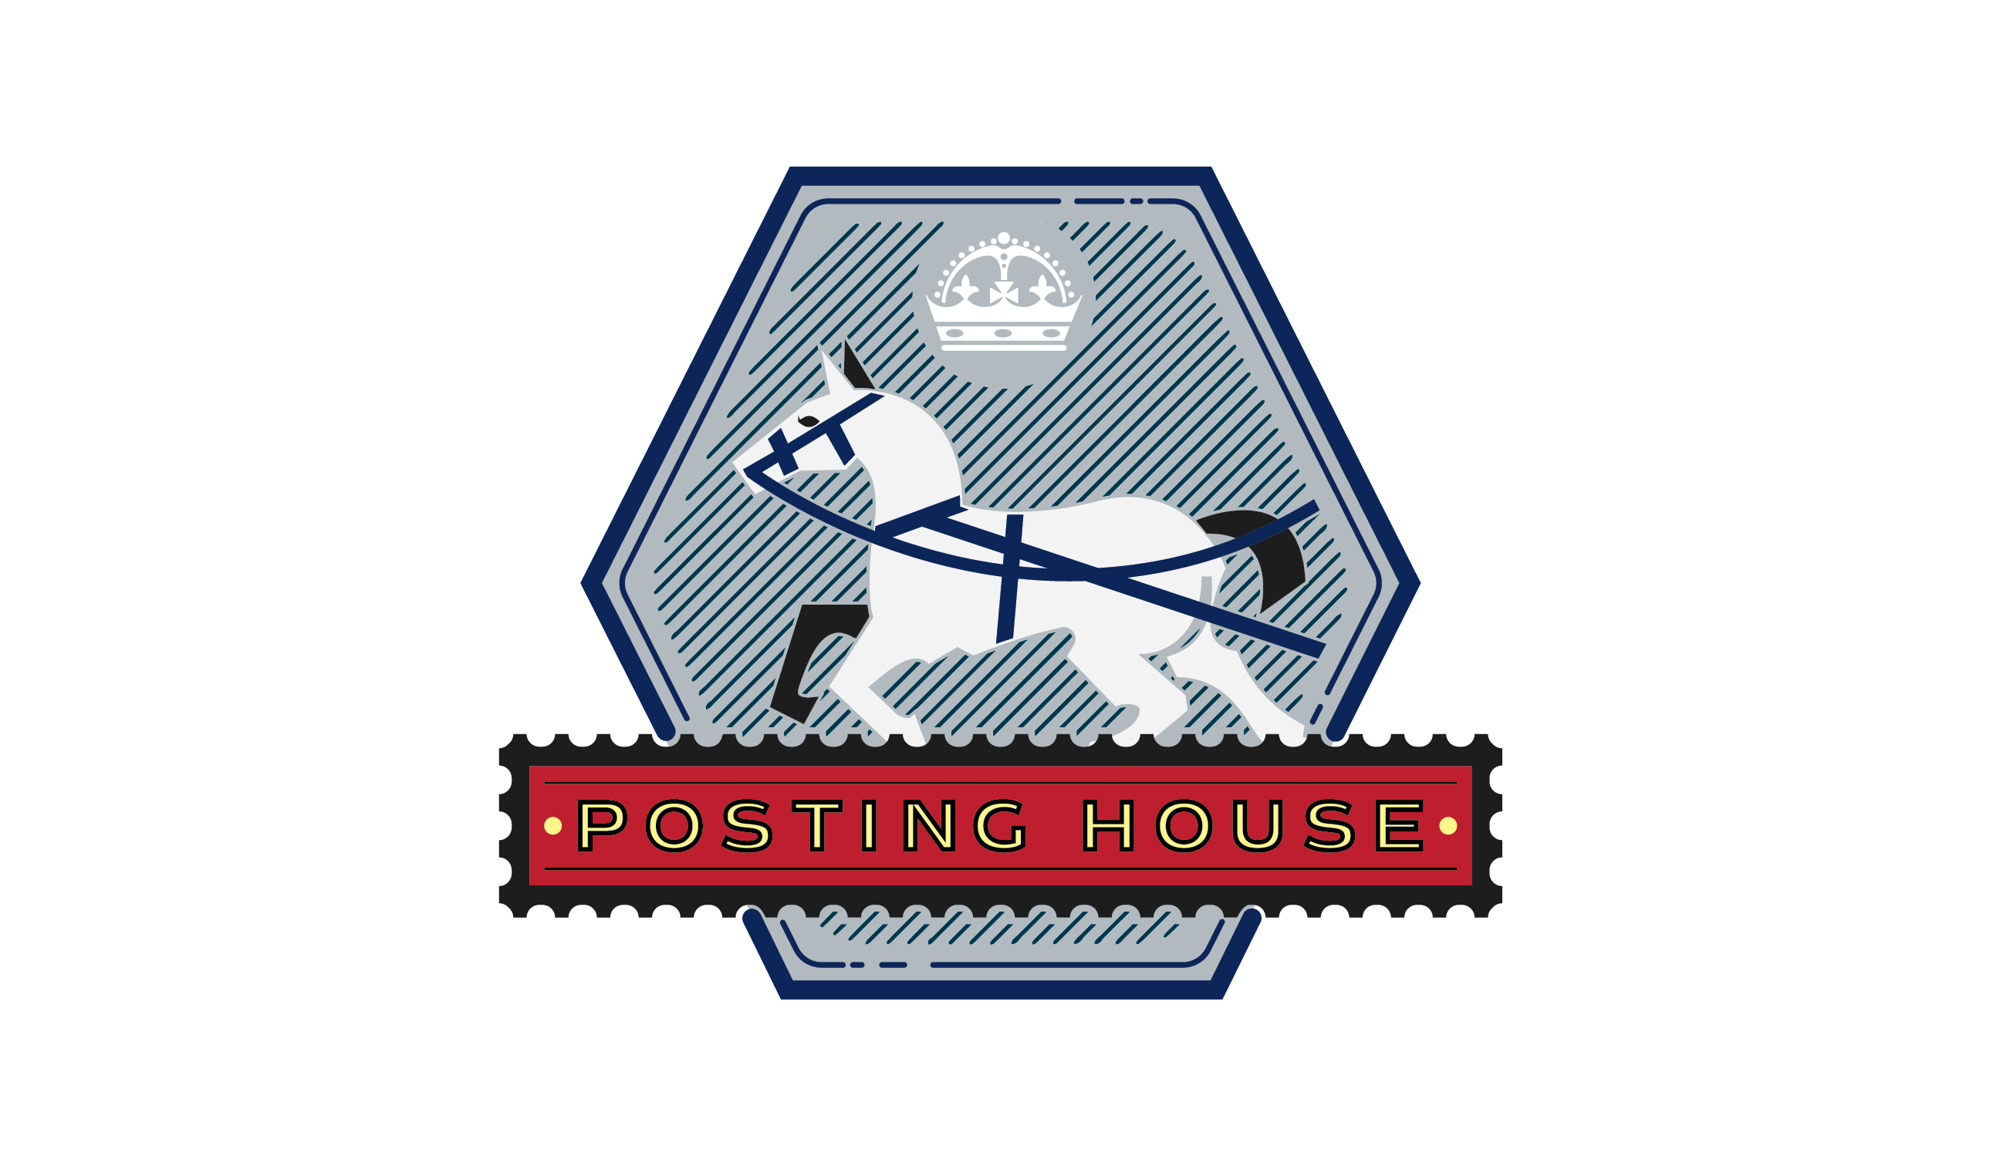 The Posting House logo